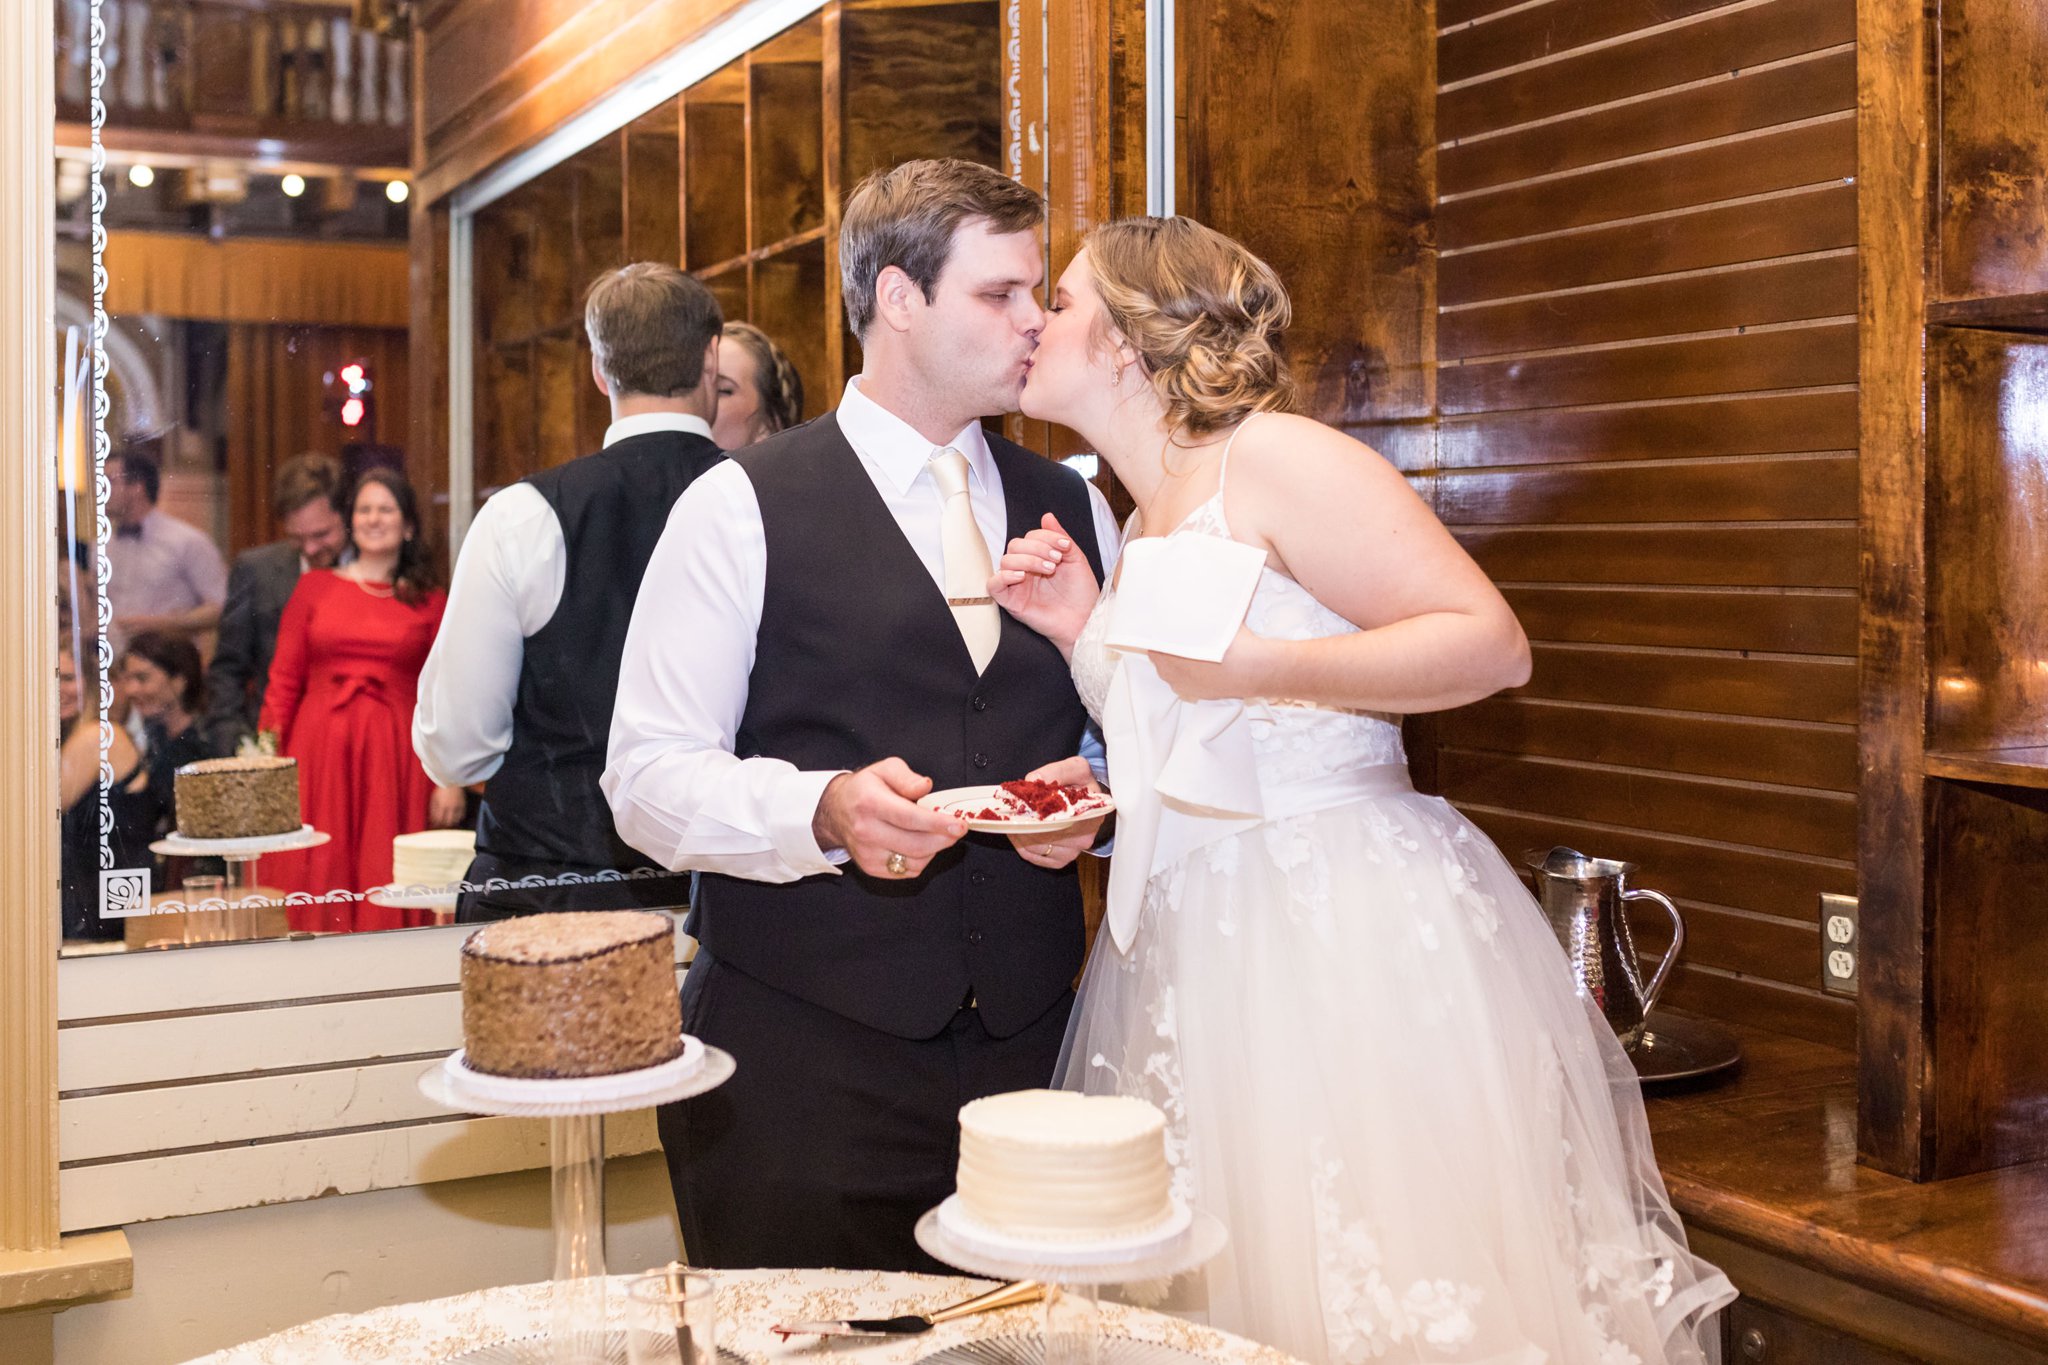 A Hunter Green and White Wedding at Sunset Station in San Antonio, TX by Dawn Elizabeth Studios, San Antonio Wedding Photographer